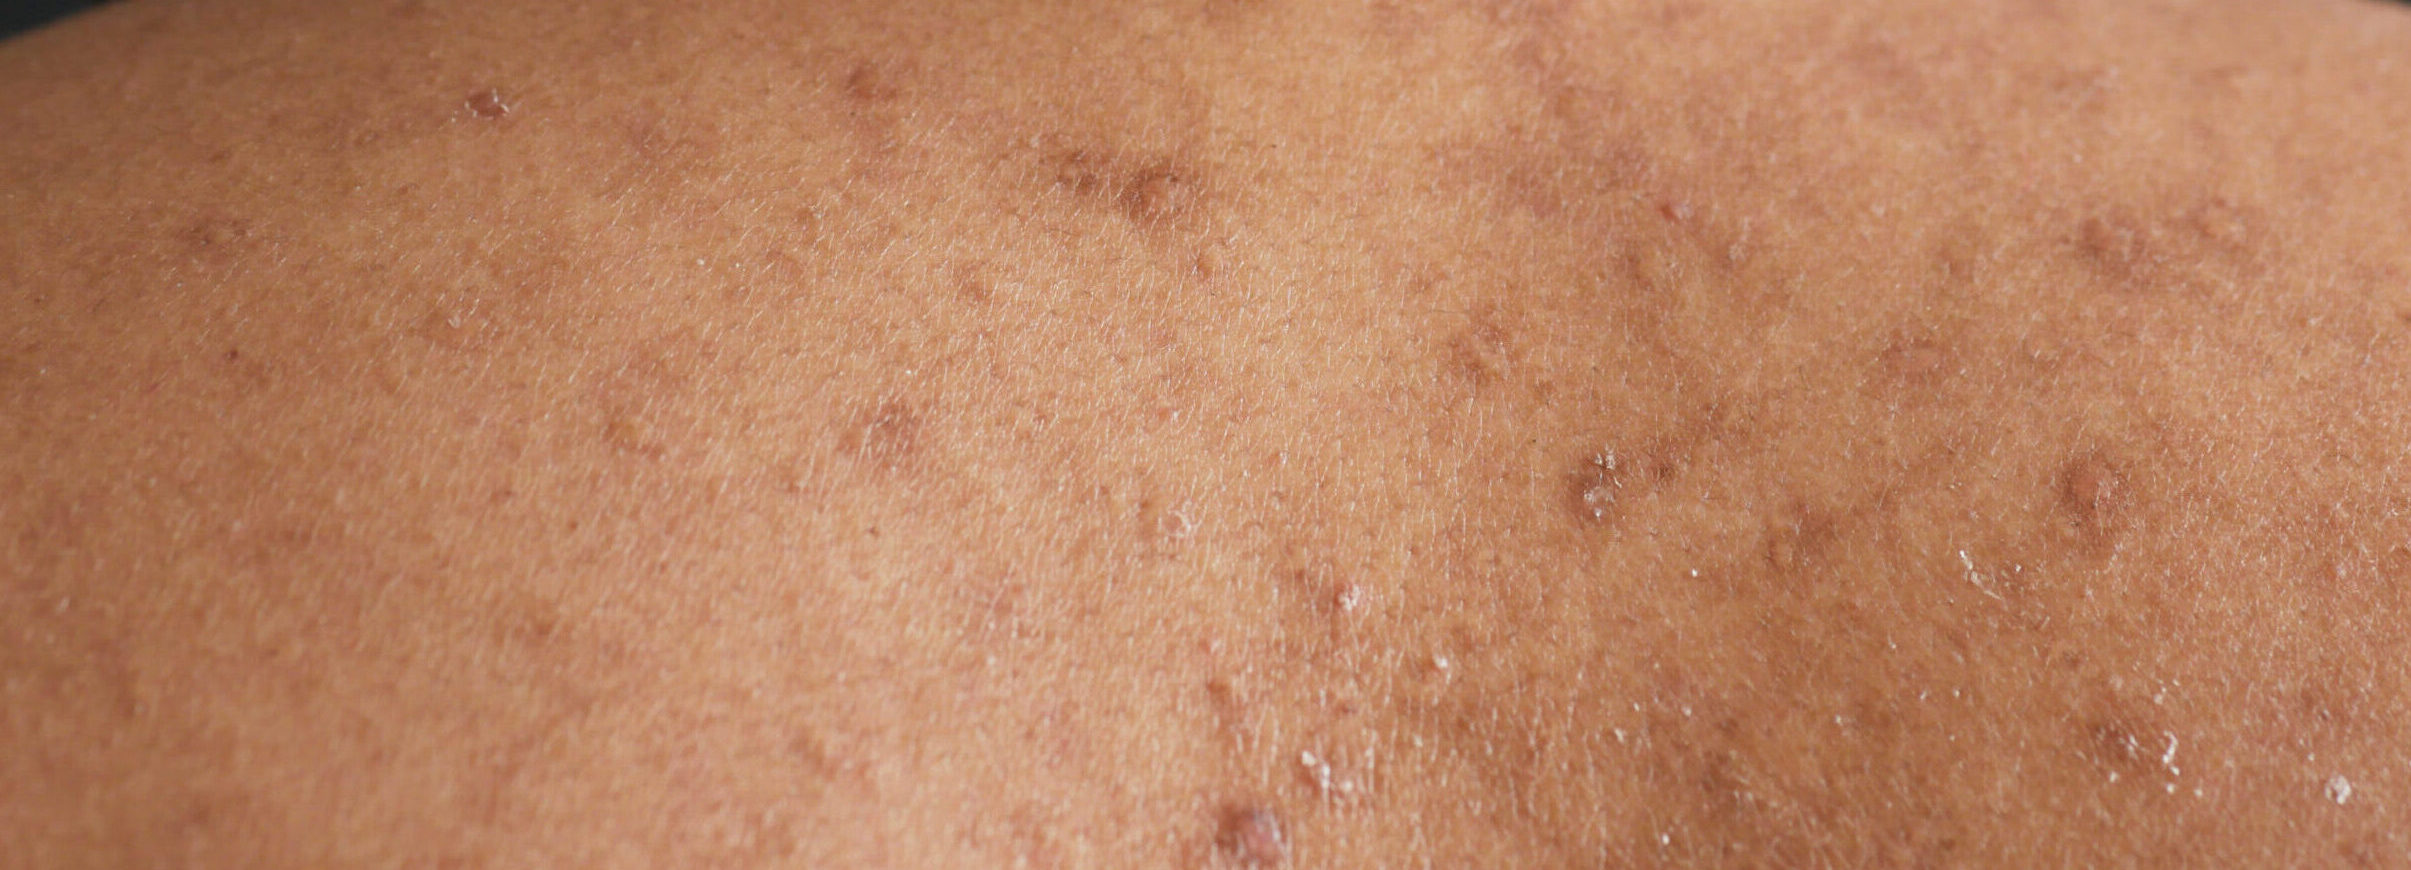 Back acne